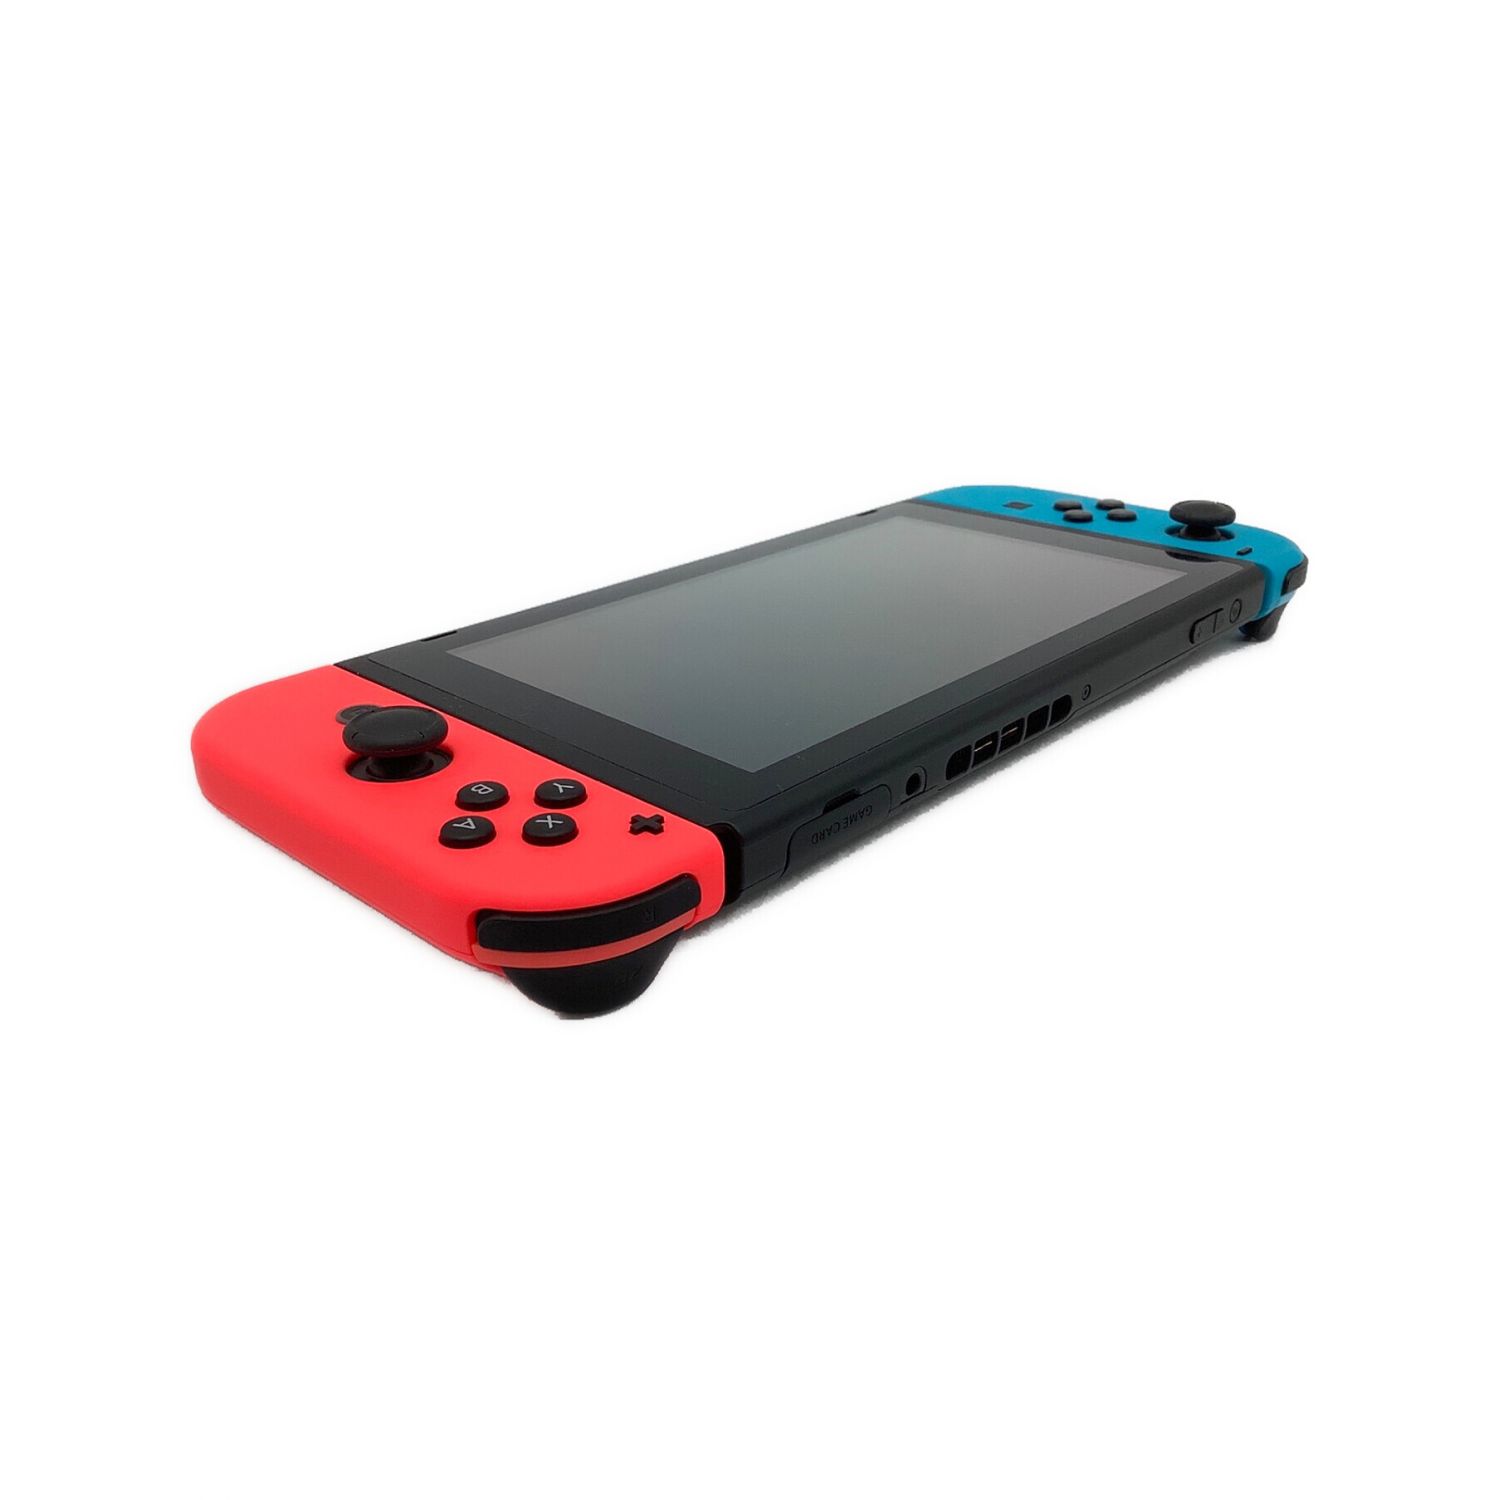 Nintendo (ニンテンドウ) Nintendo Switch 本体のみ・箱無し HEC-001 